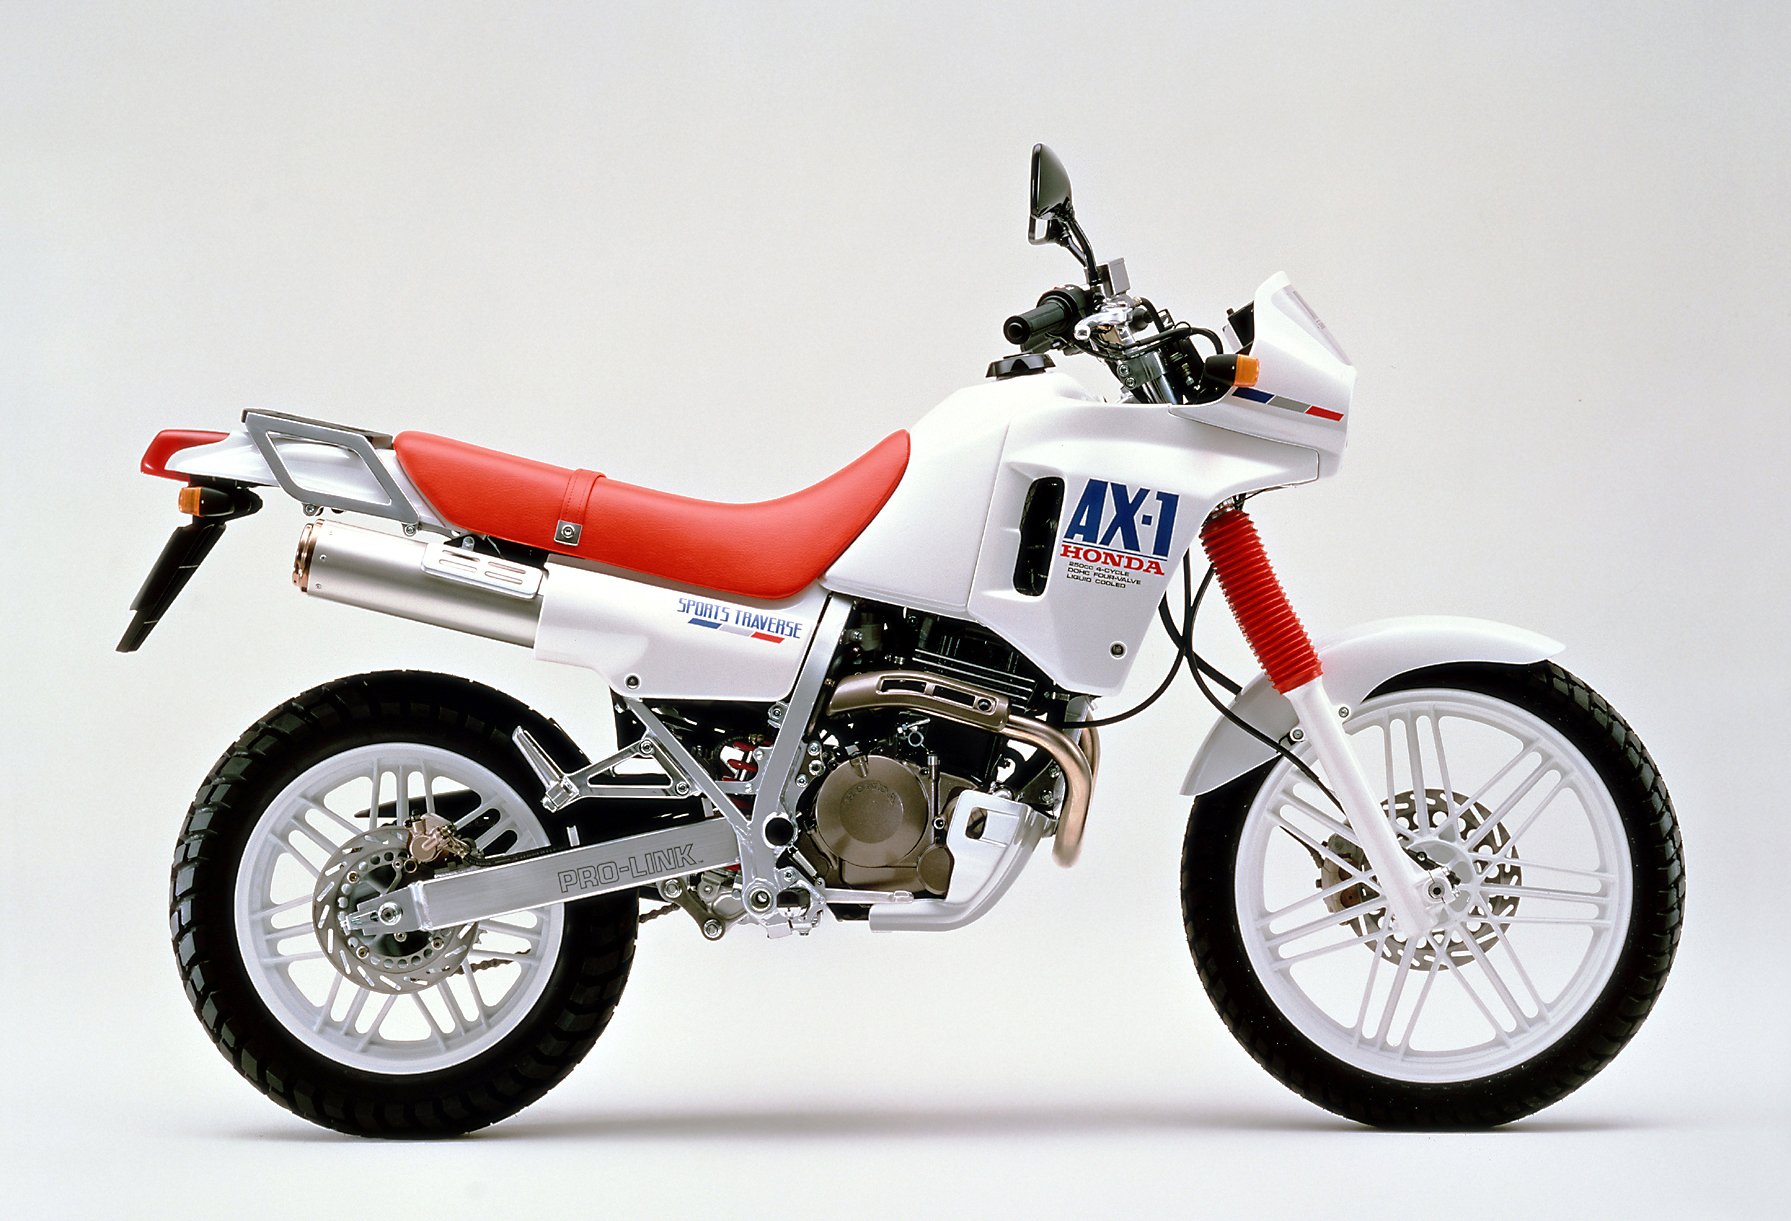 Honda nx250 - honda nx250 - abcdef.wiki